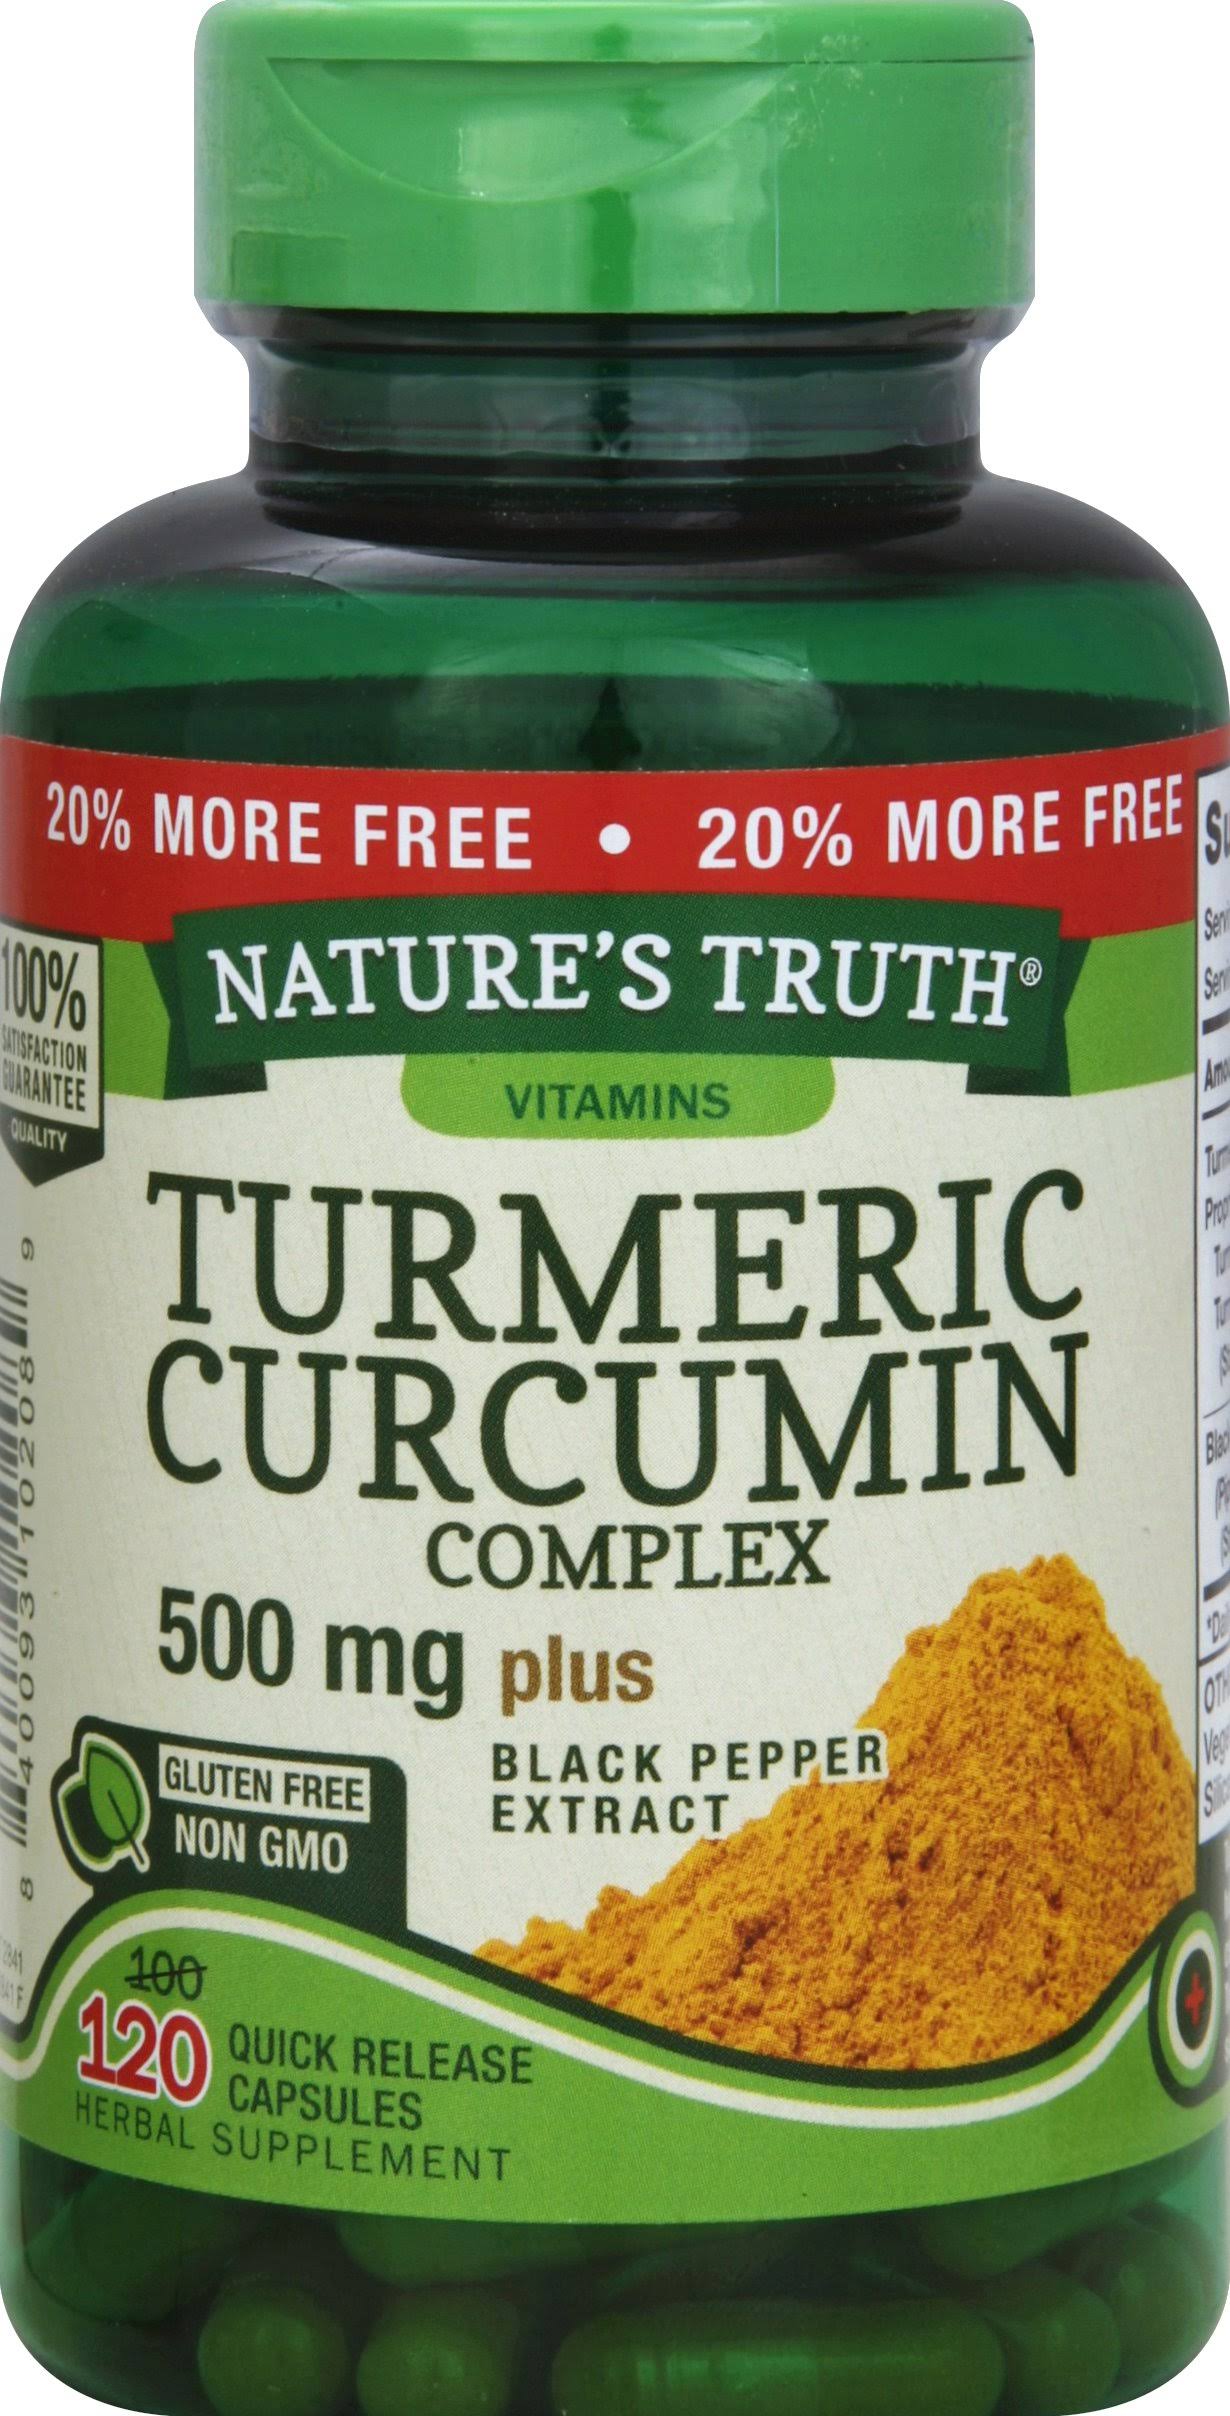 Nature's Truth Turmeric Curcumin Complex 500 mg Plus - Black Pepper Extract, 120ct